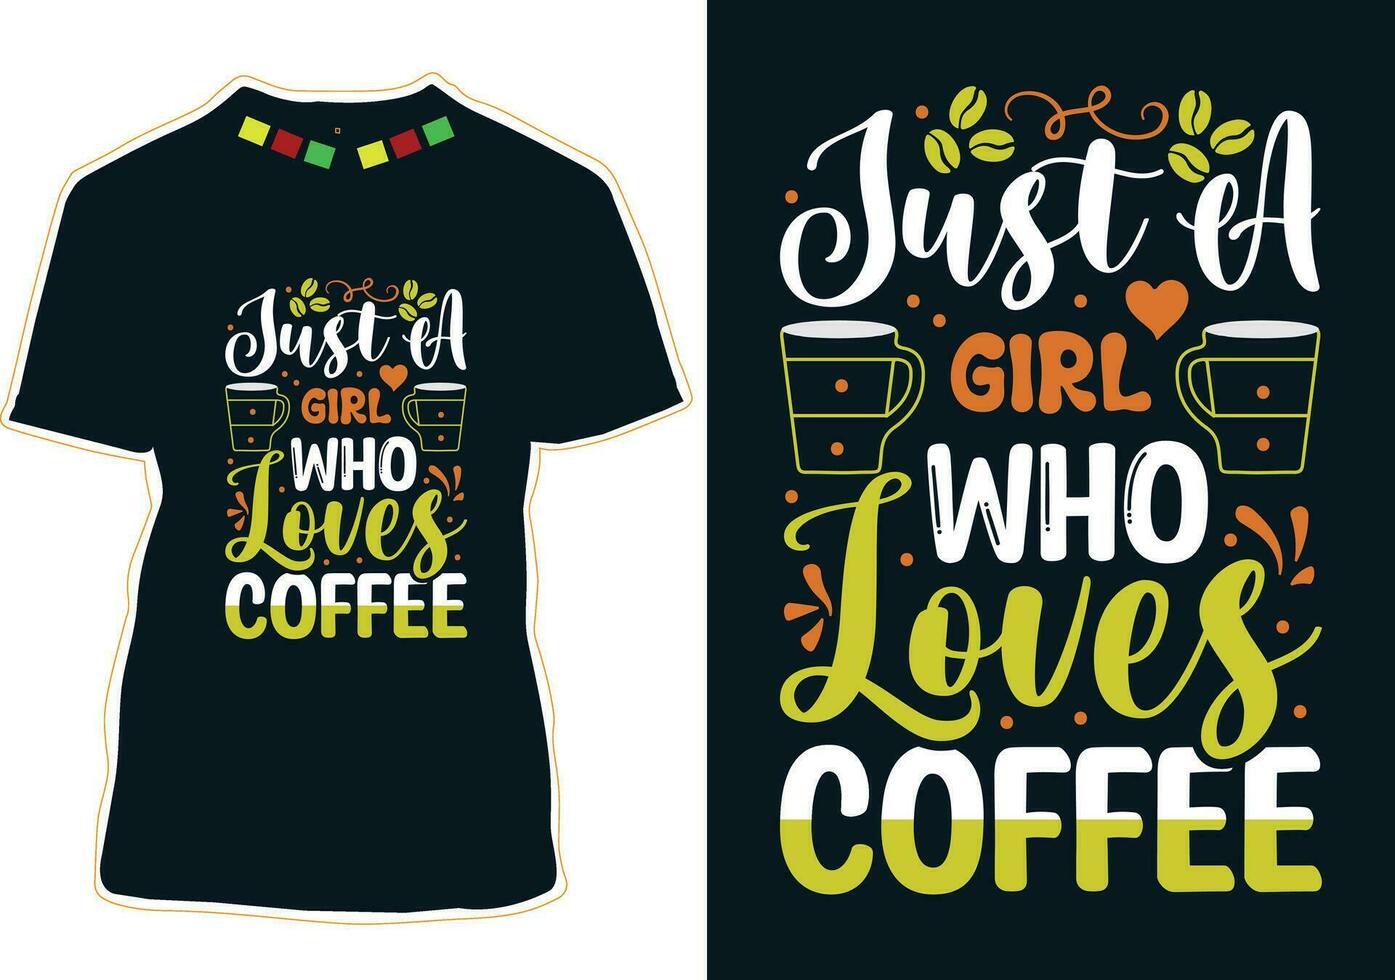 gerade ein Mädchen Wer liebt Kaffee, International Kaffee Tag T-Shirt Design vektor